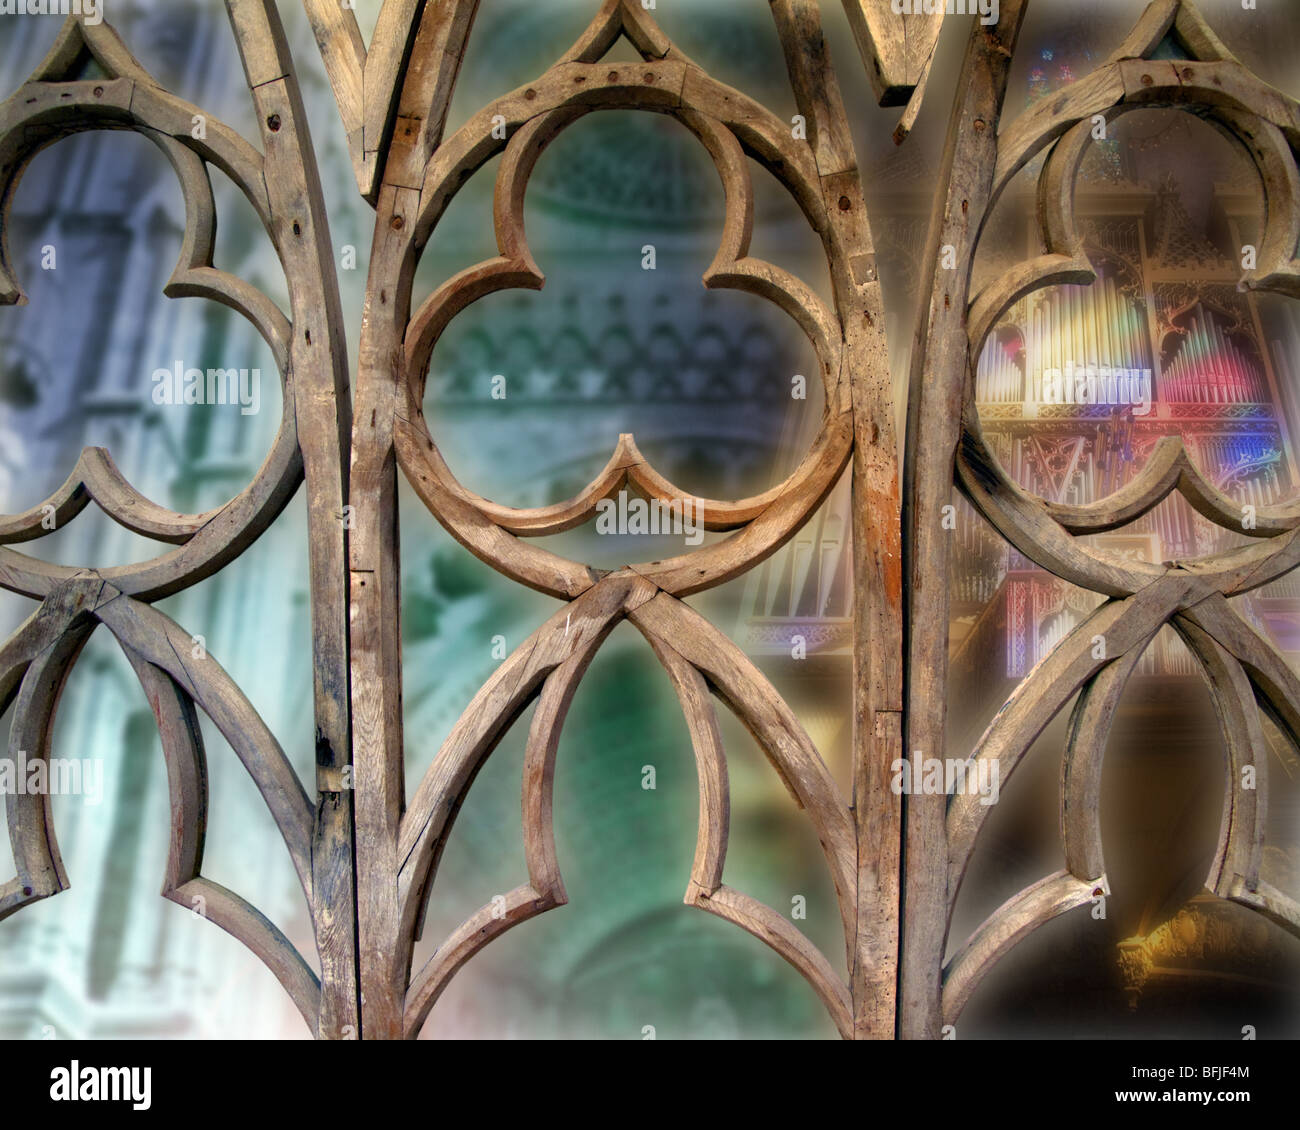 ES - MALLORCA: La Seu Cathedral a Palma de Mallorca (Arte Digitale) Foto Stock